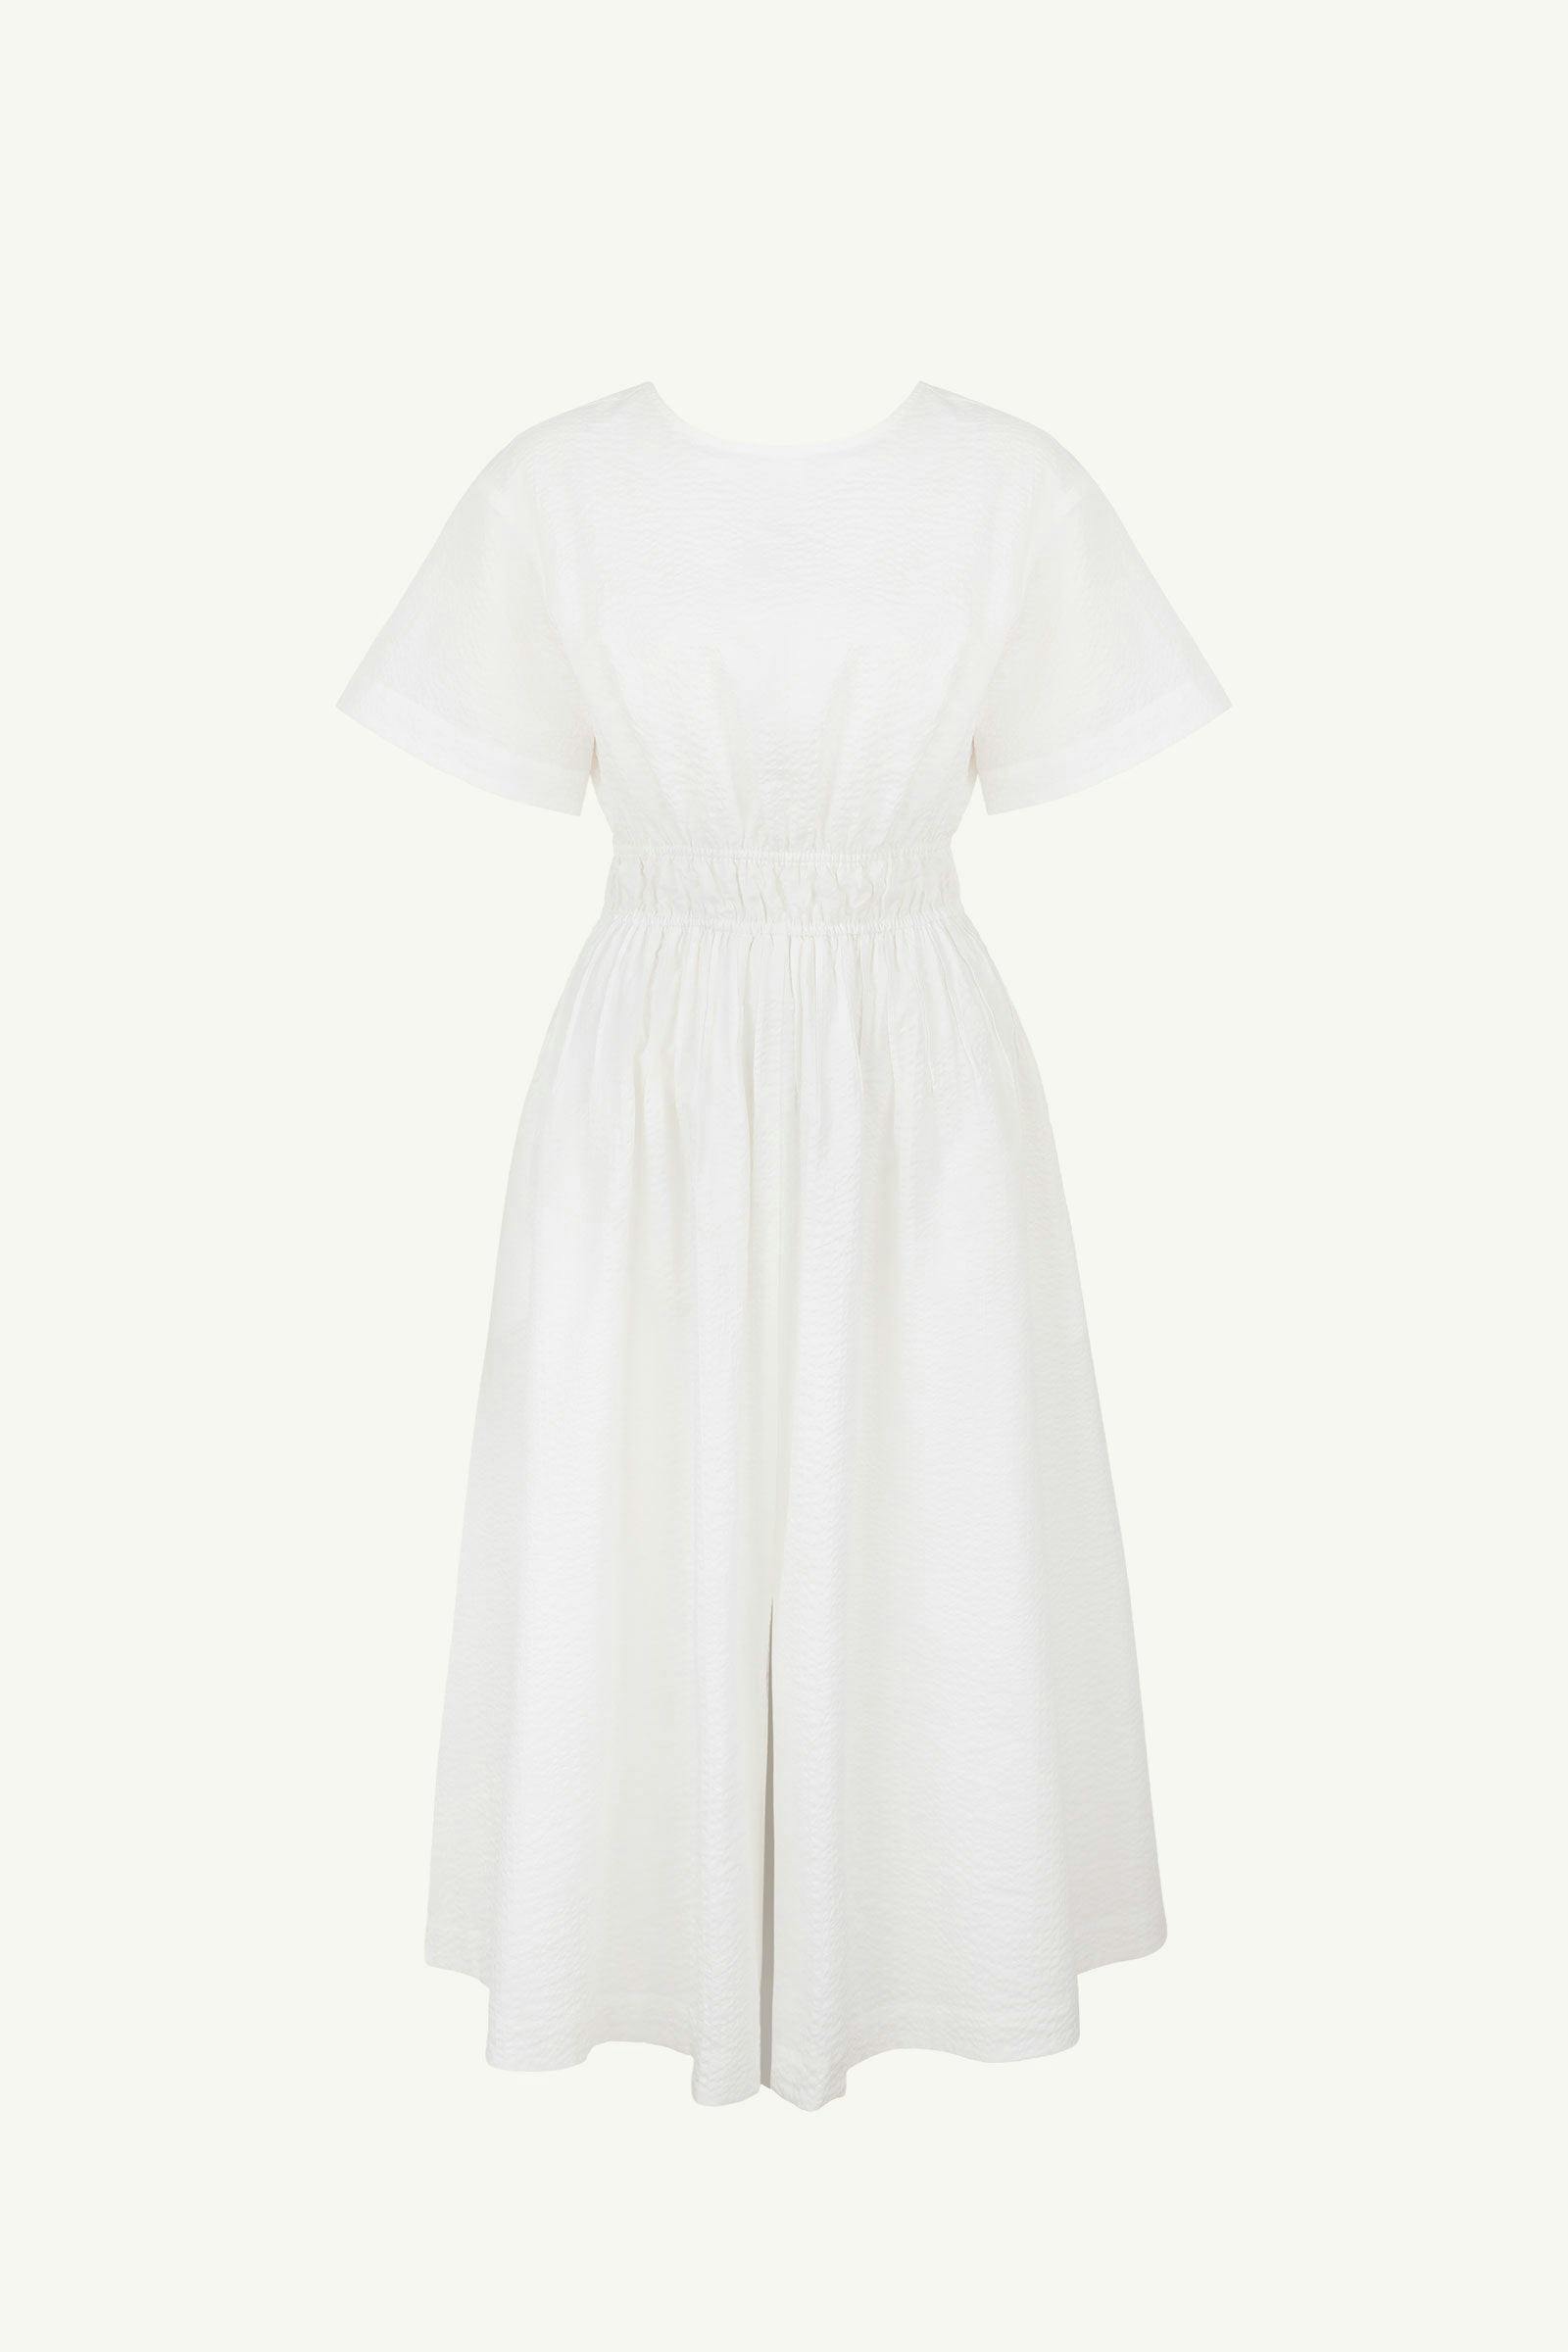 Ferris Dress | Textured Gathered Waist Dress | 100% Cotton | White ...